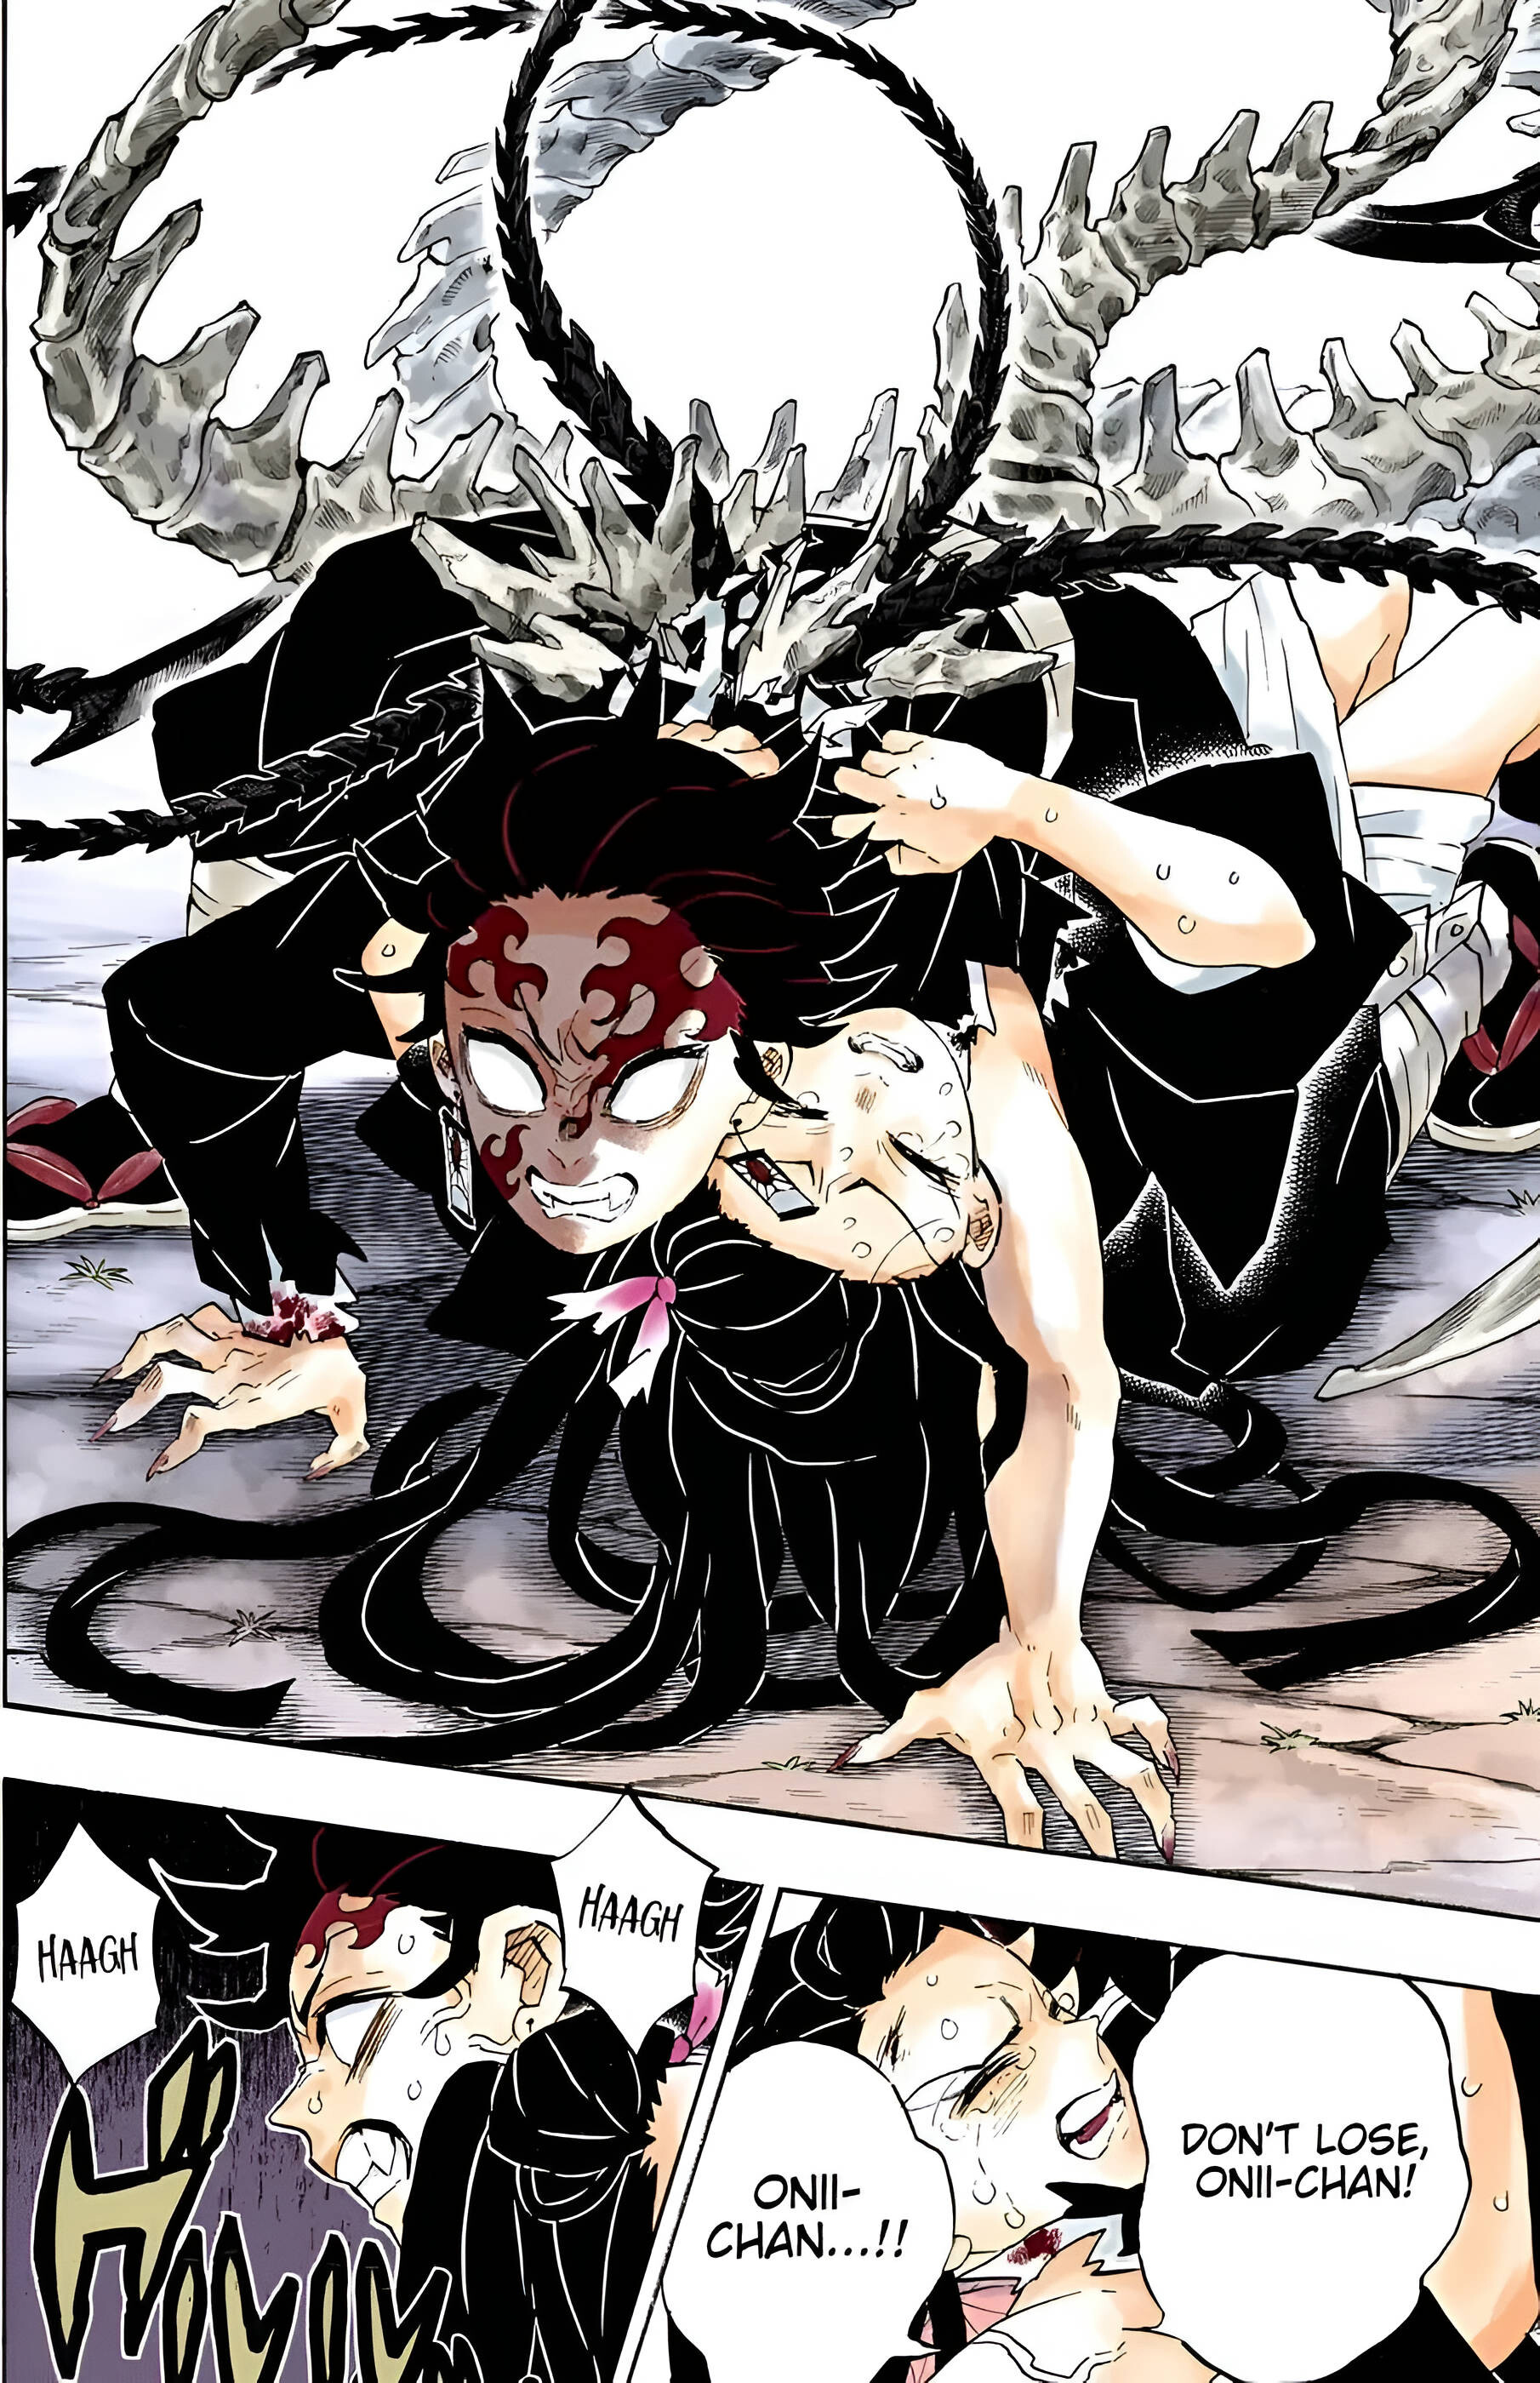 ArtStation - Demon Slayer Colored Manga Panels